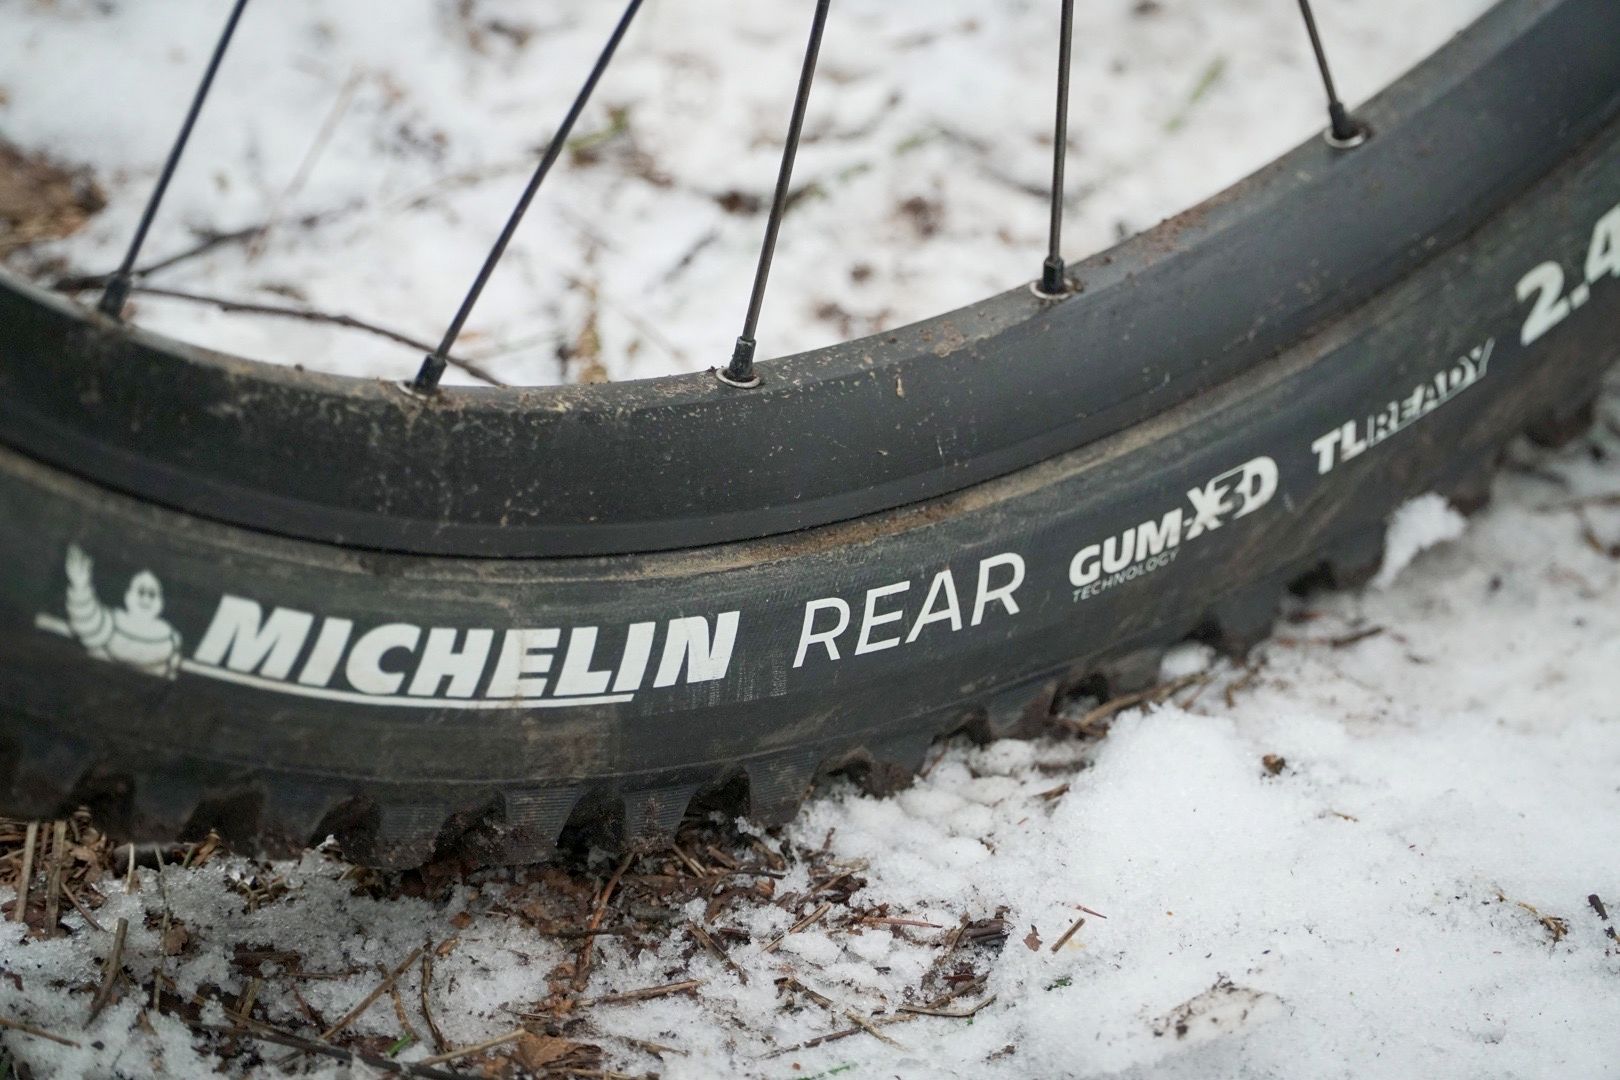 Michelin Wild enduro rear